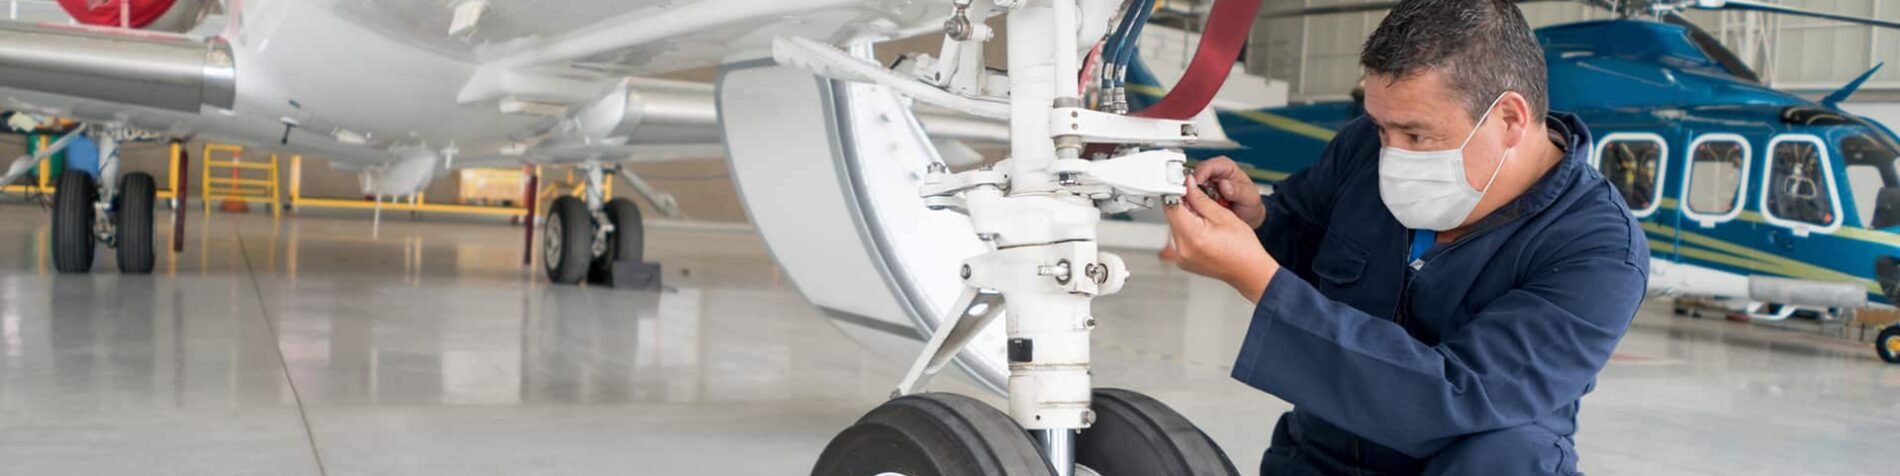 Sustainability Takes Flight across Aviation Industry